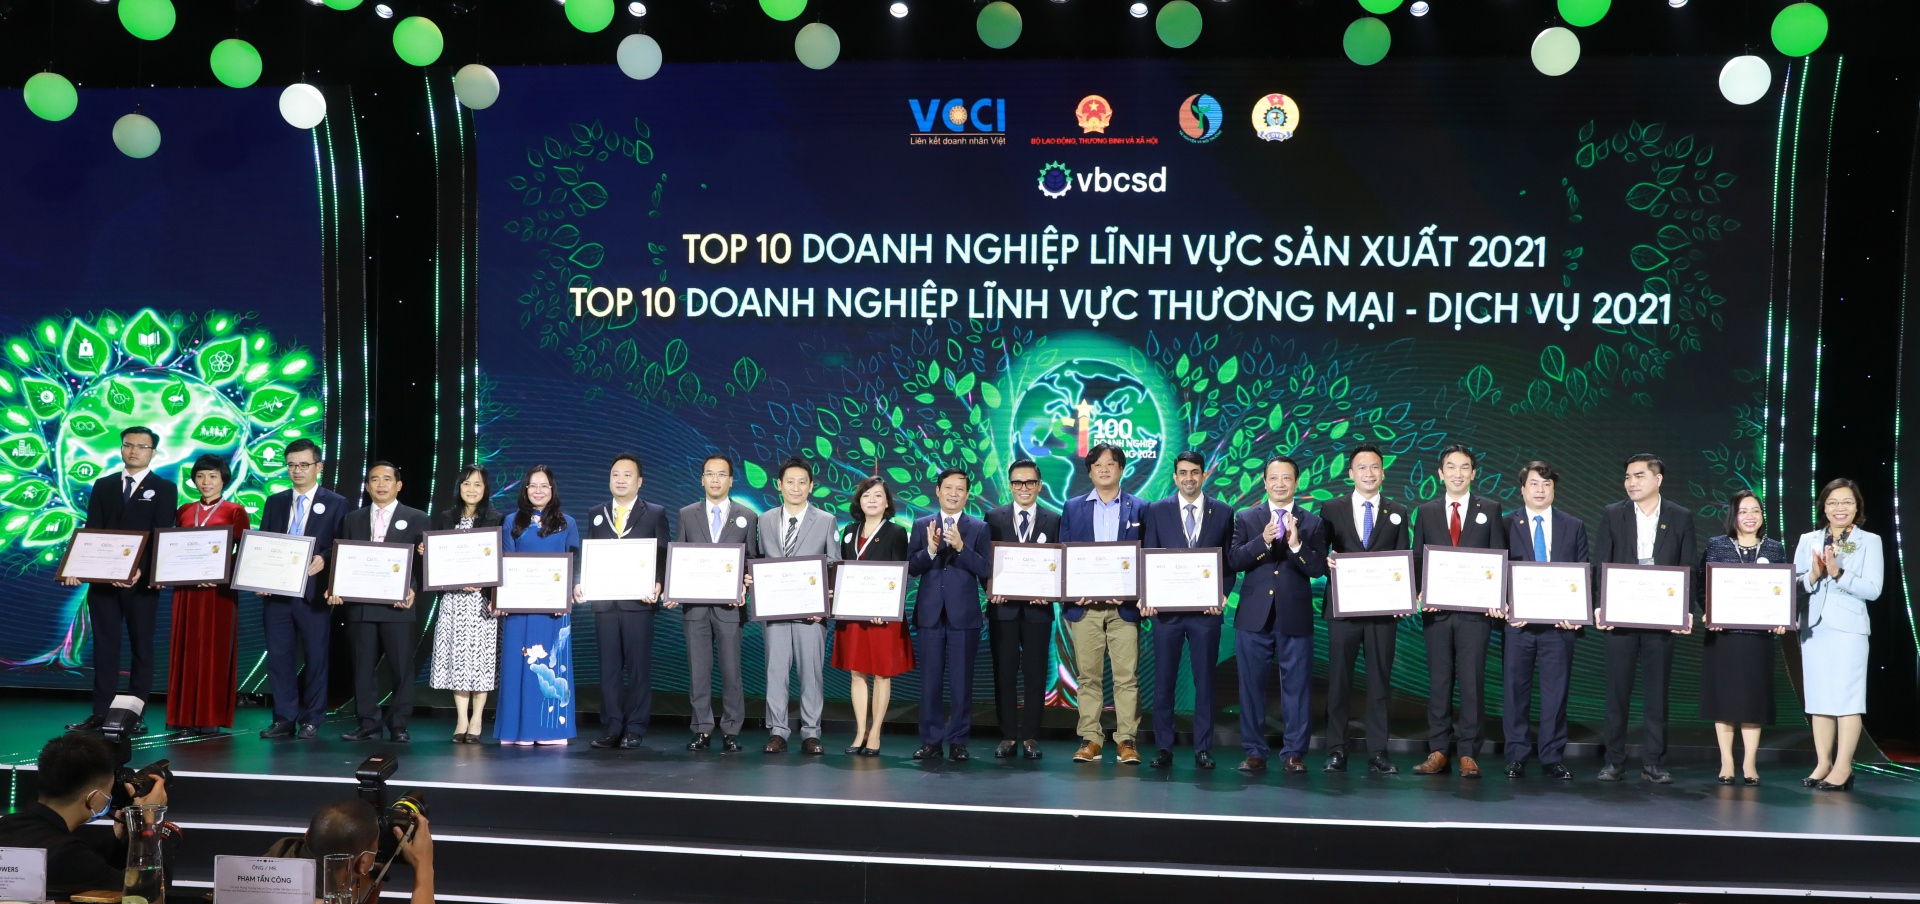 Nestlé Vietnam honoured as most sustainable enterprise in Vietnam